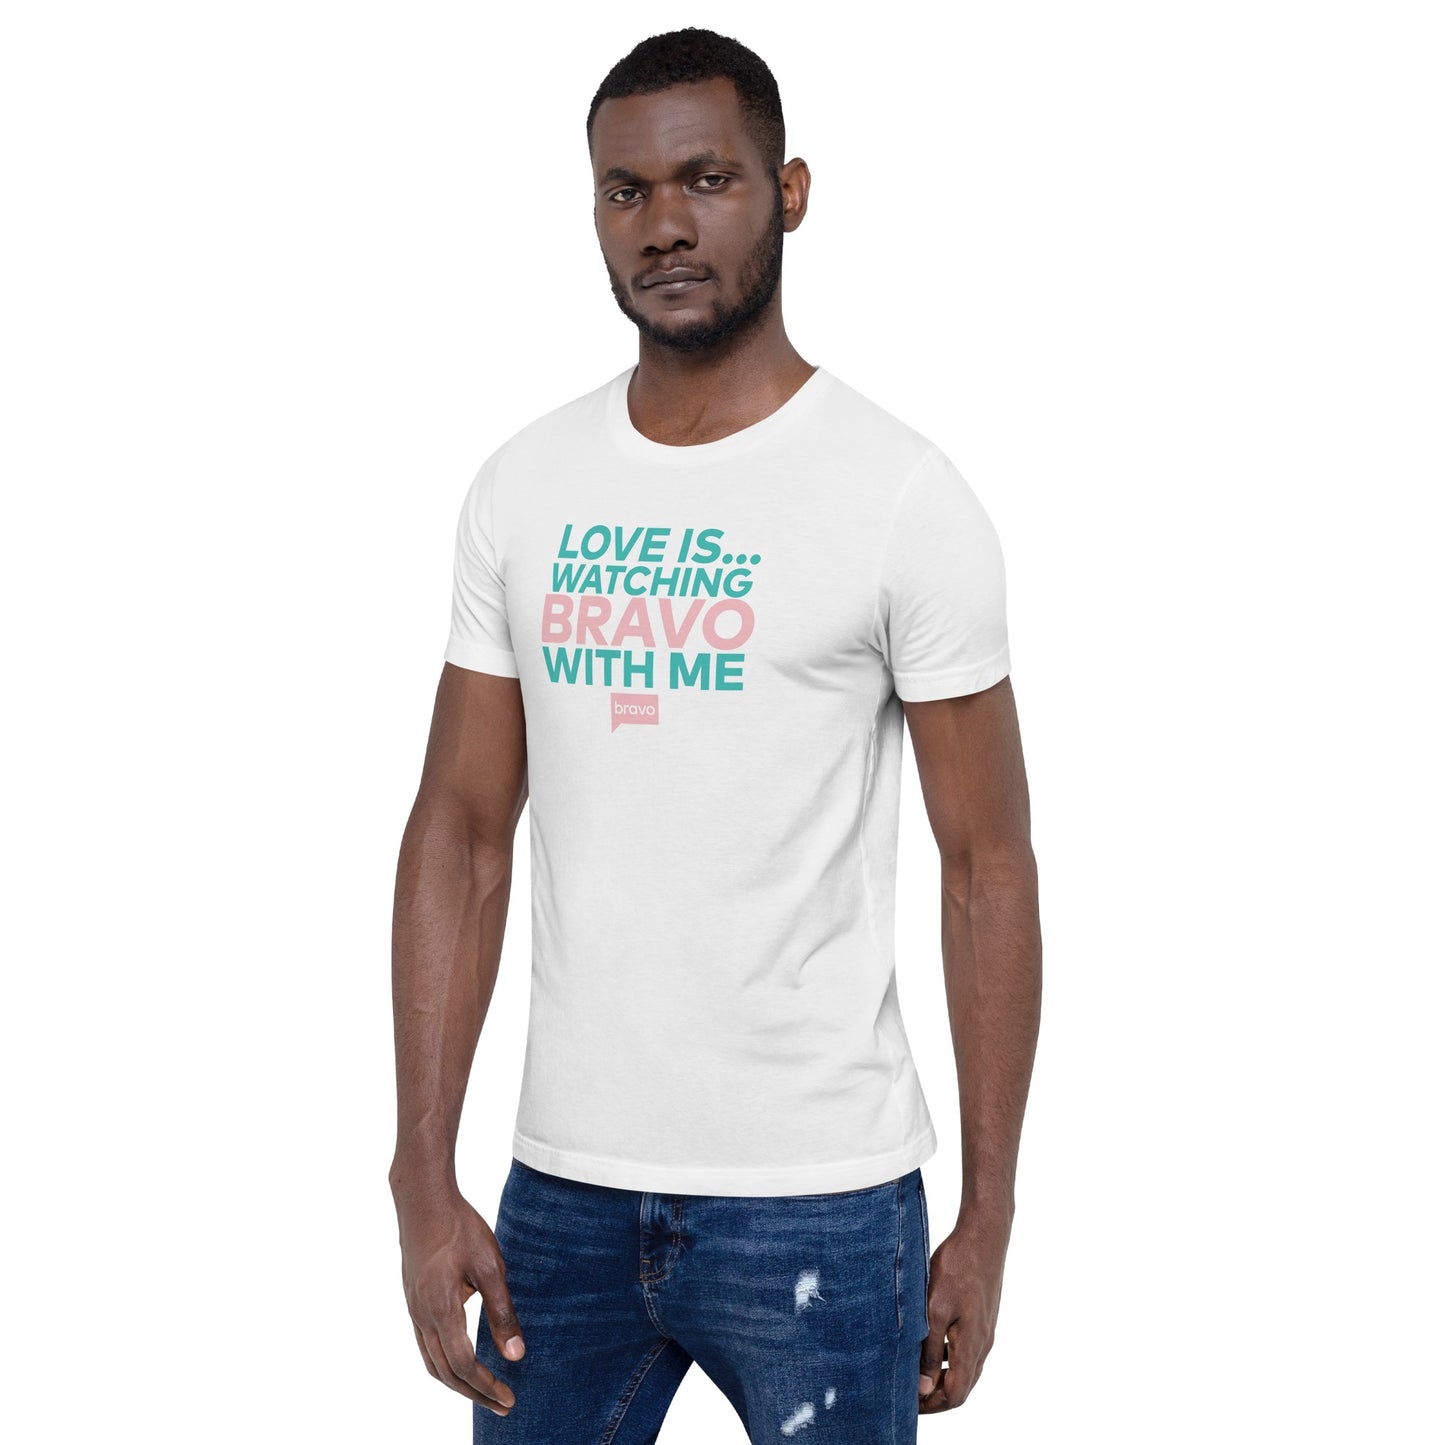 Bravo Gear Love Is.. Bravo Adult Short Sleeve T-Shirt